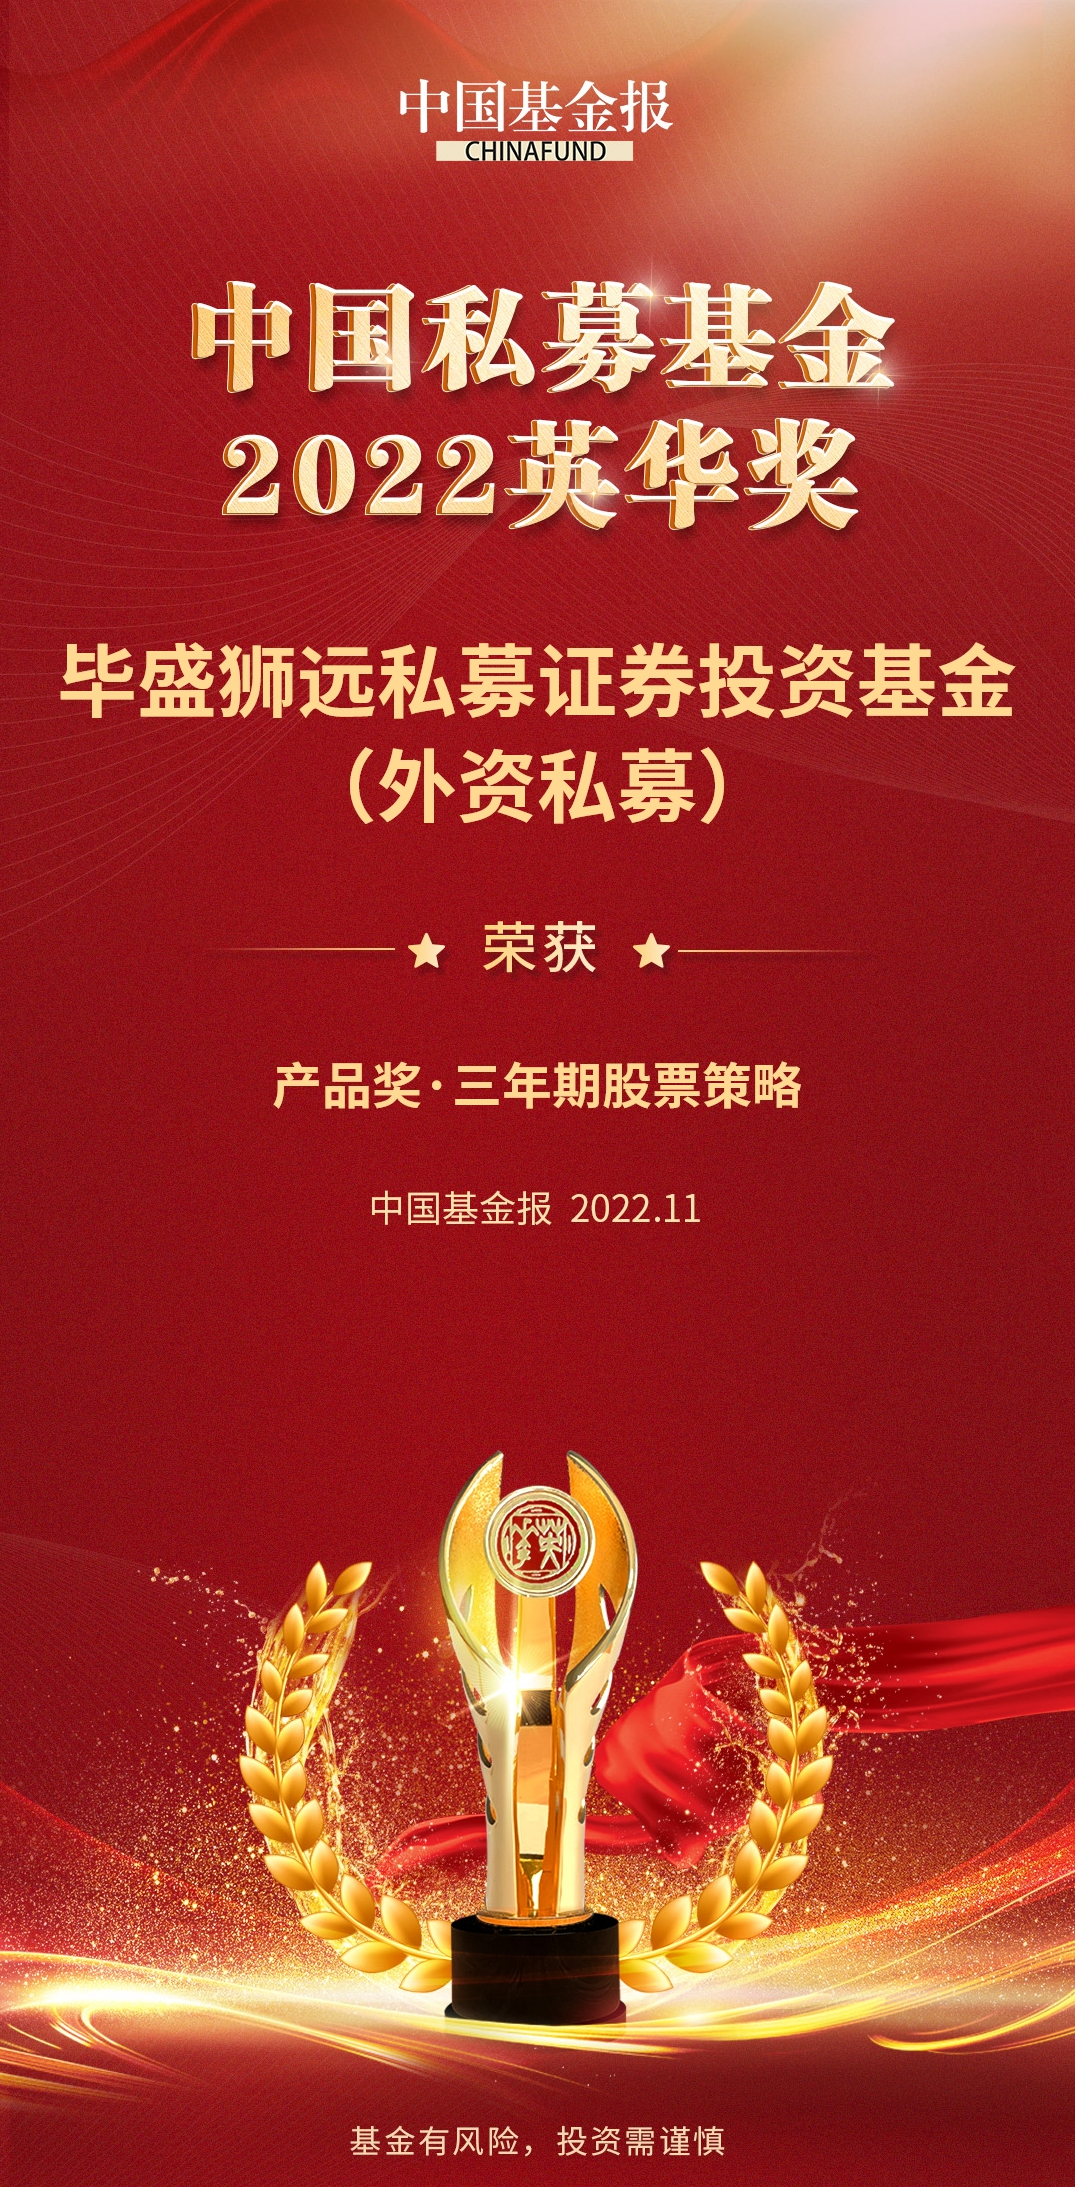 onshore 3-year PFM Equity Fund award 2022中国私募基金英华奖 organized by China Fund (中国基金报).png